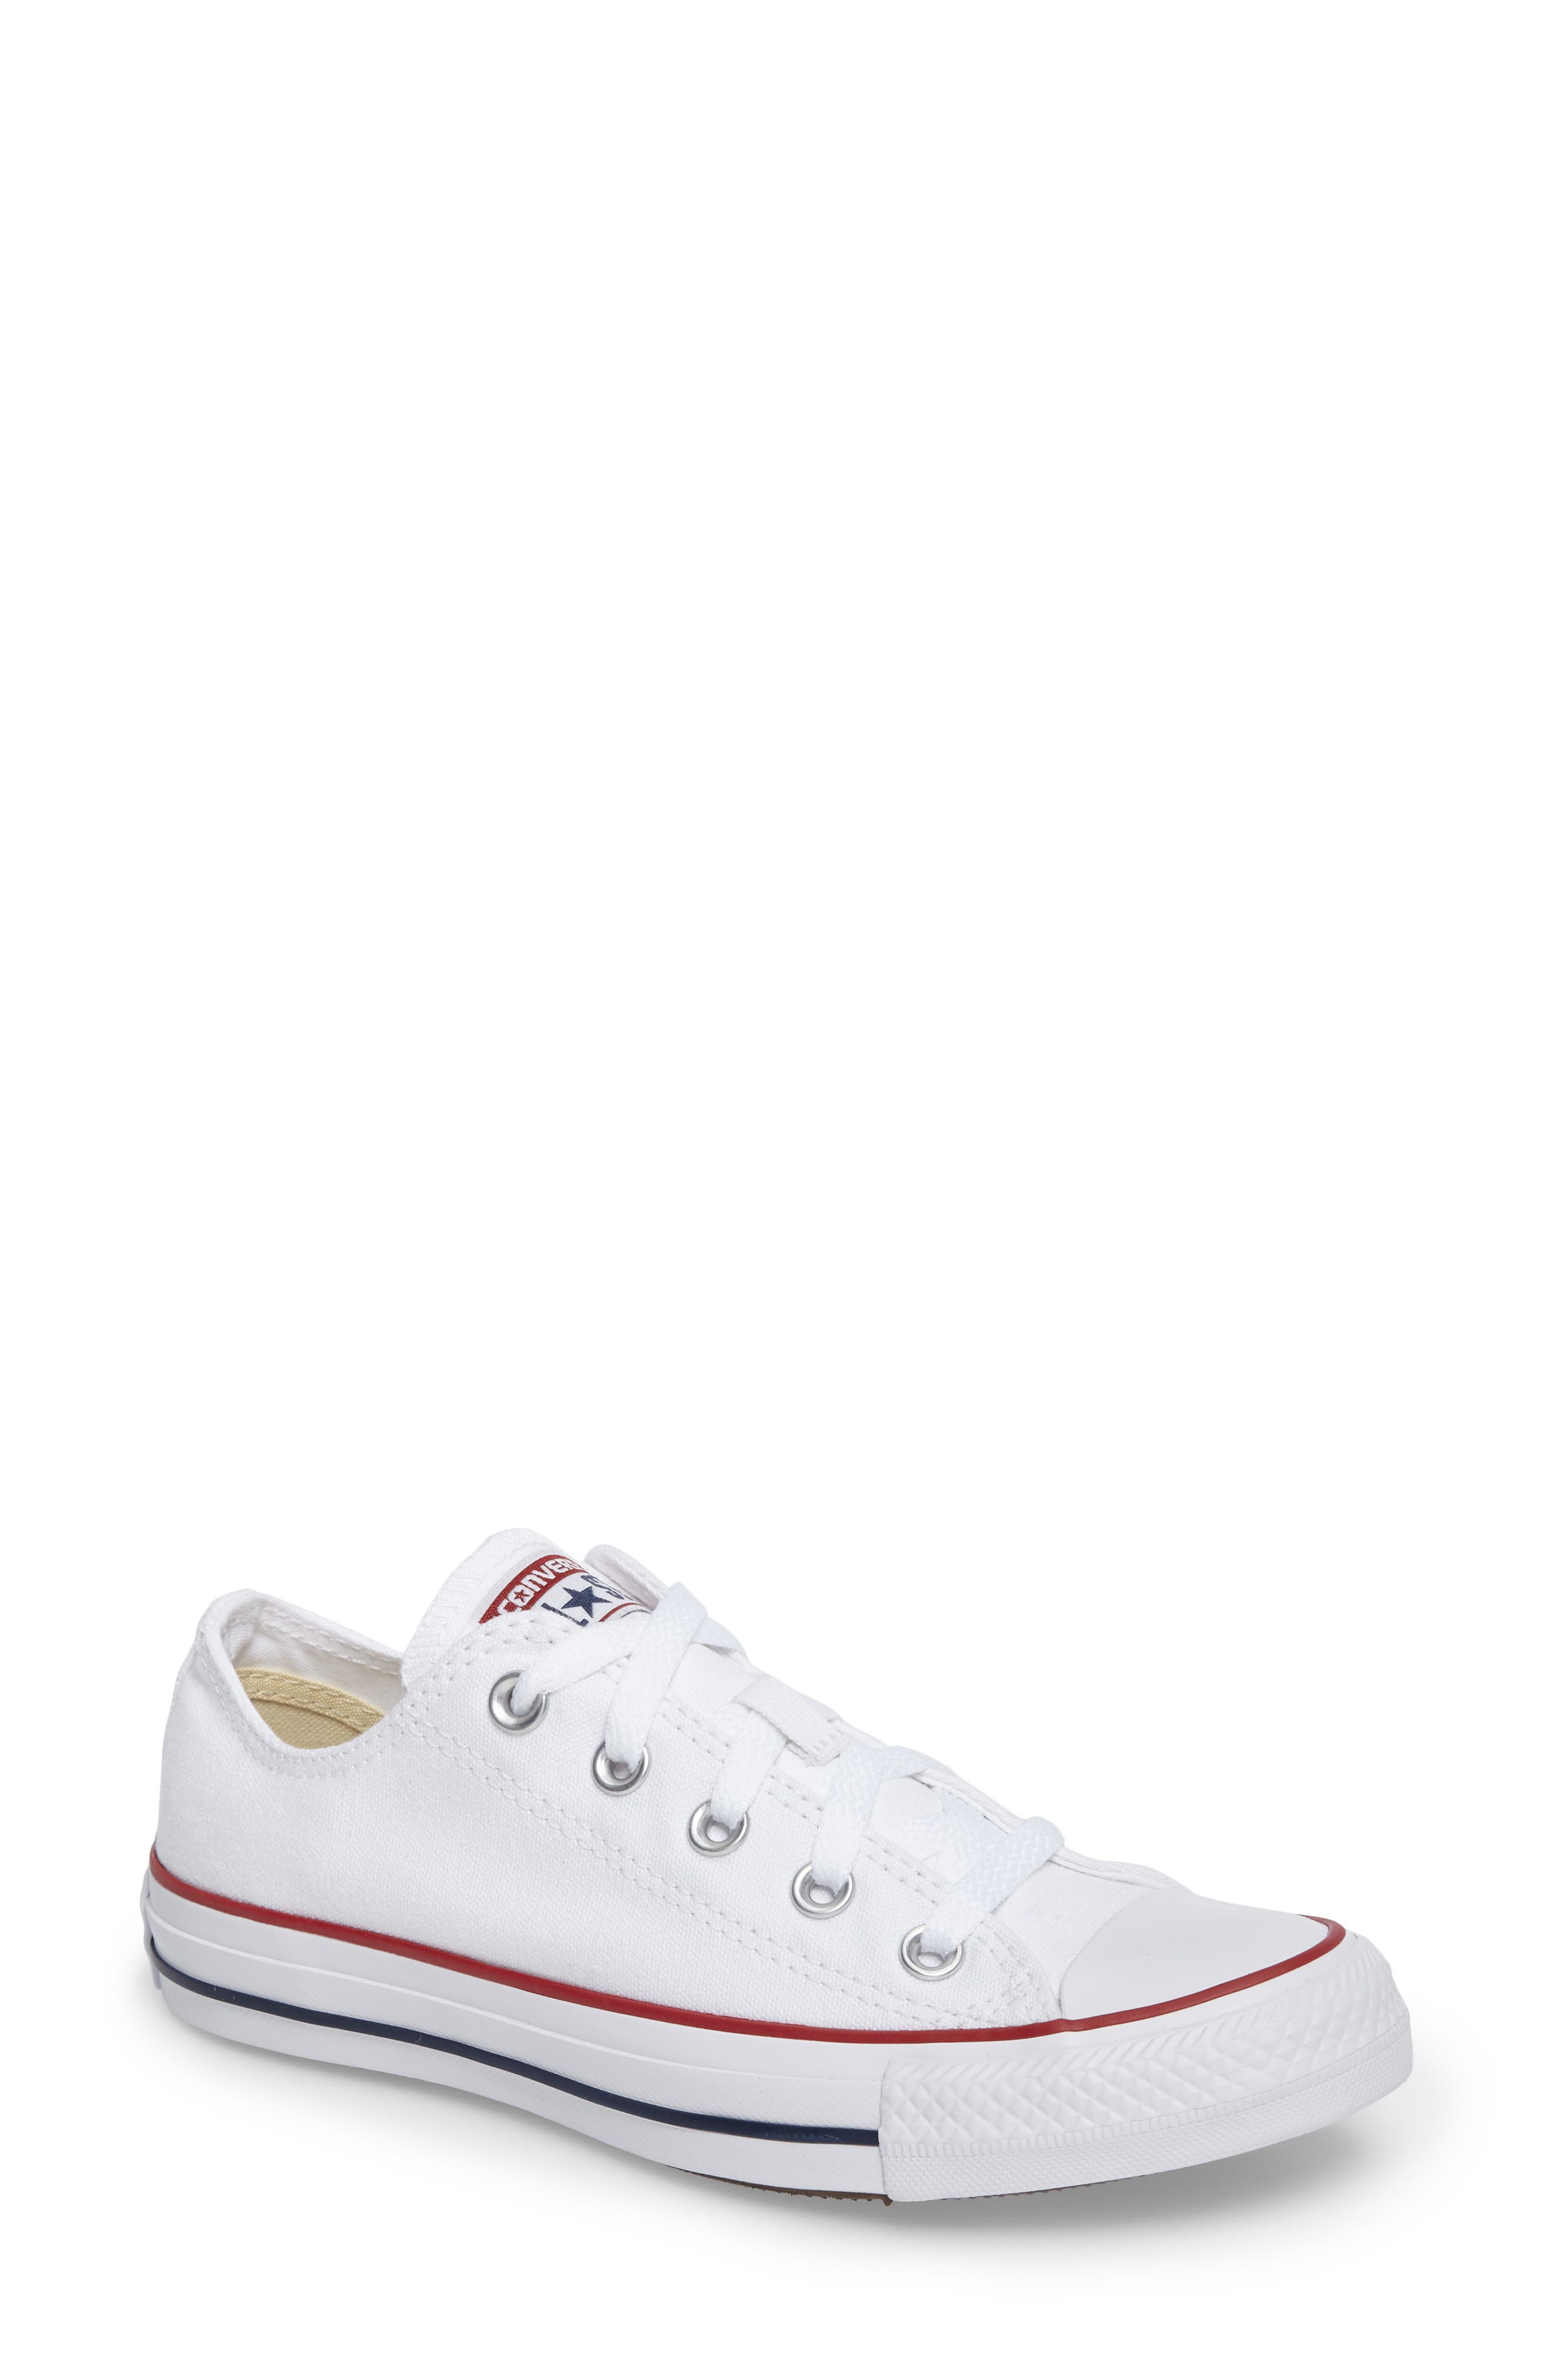 white converse shoe dept